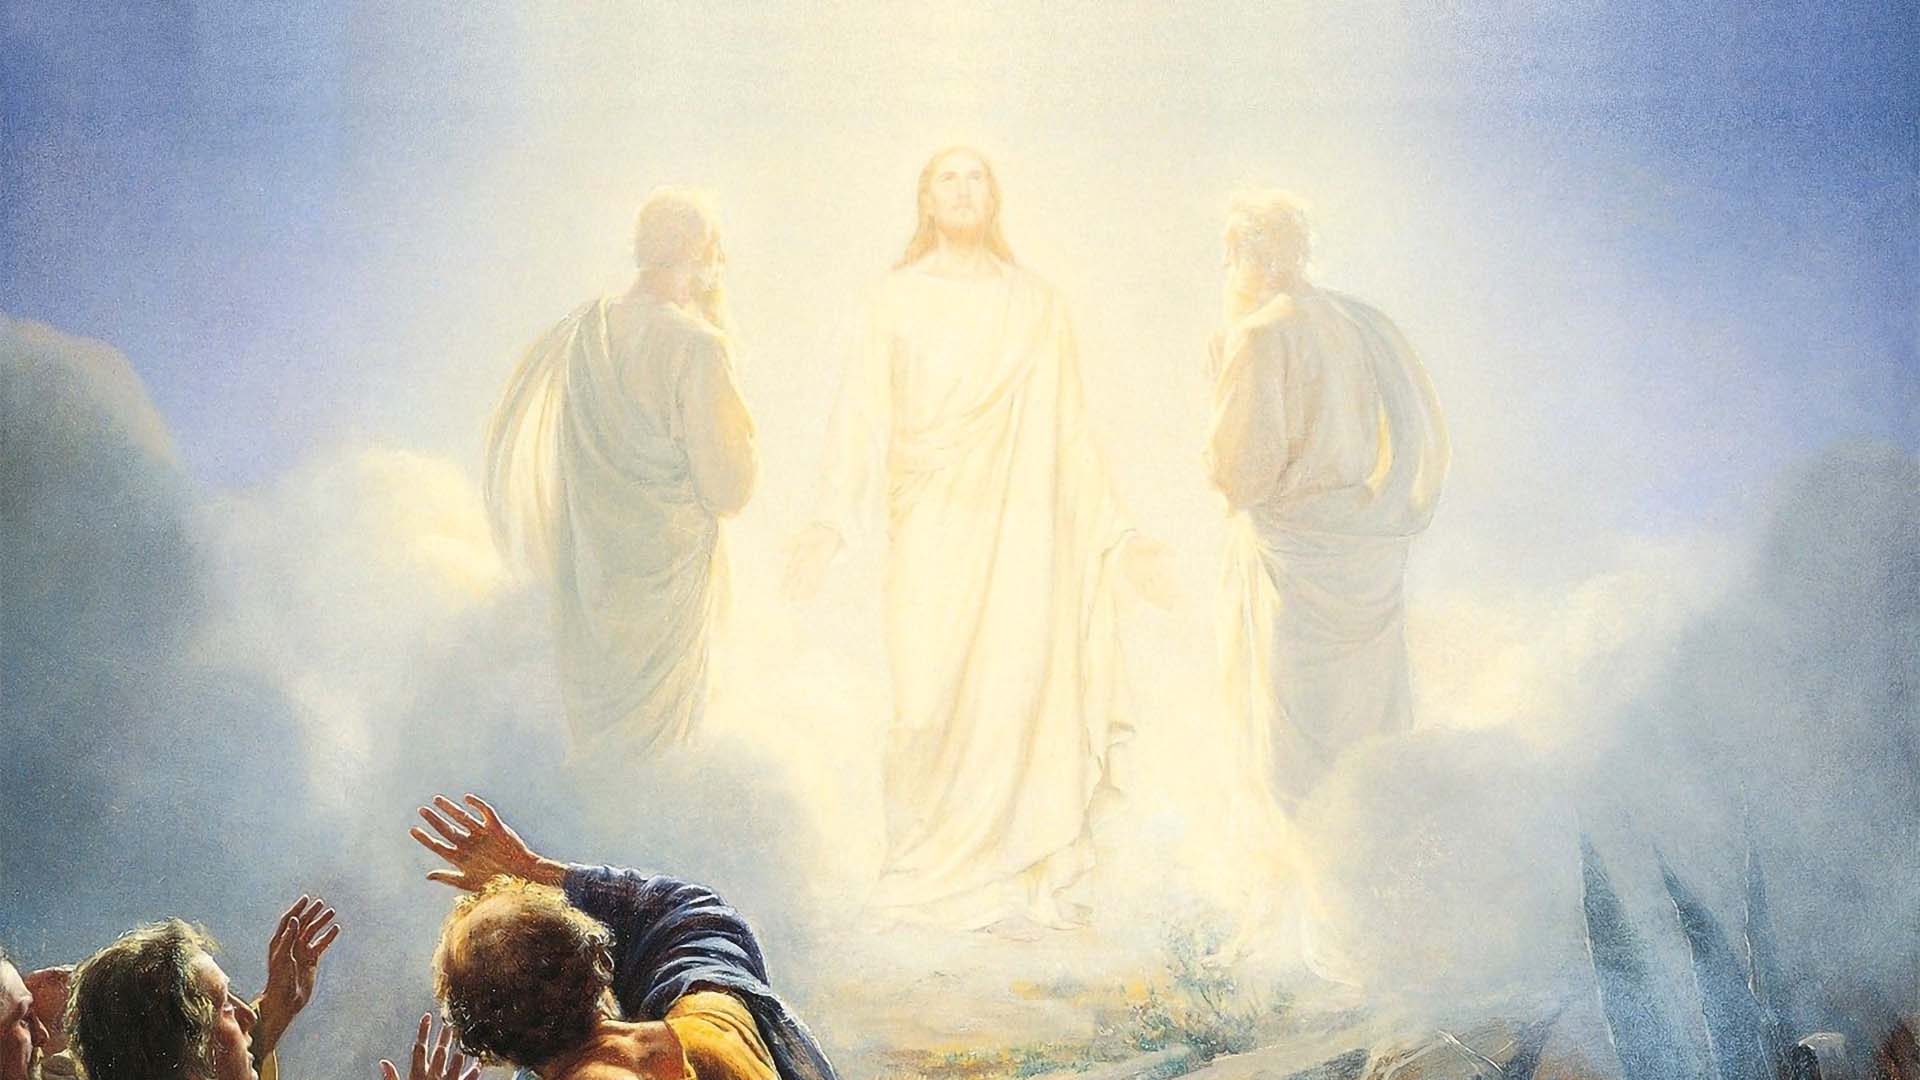 The Transfiguration, by Carl Heinrich Bloch. Image via Church of Jesus Christ.